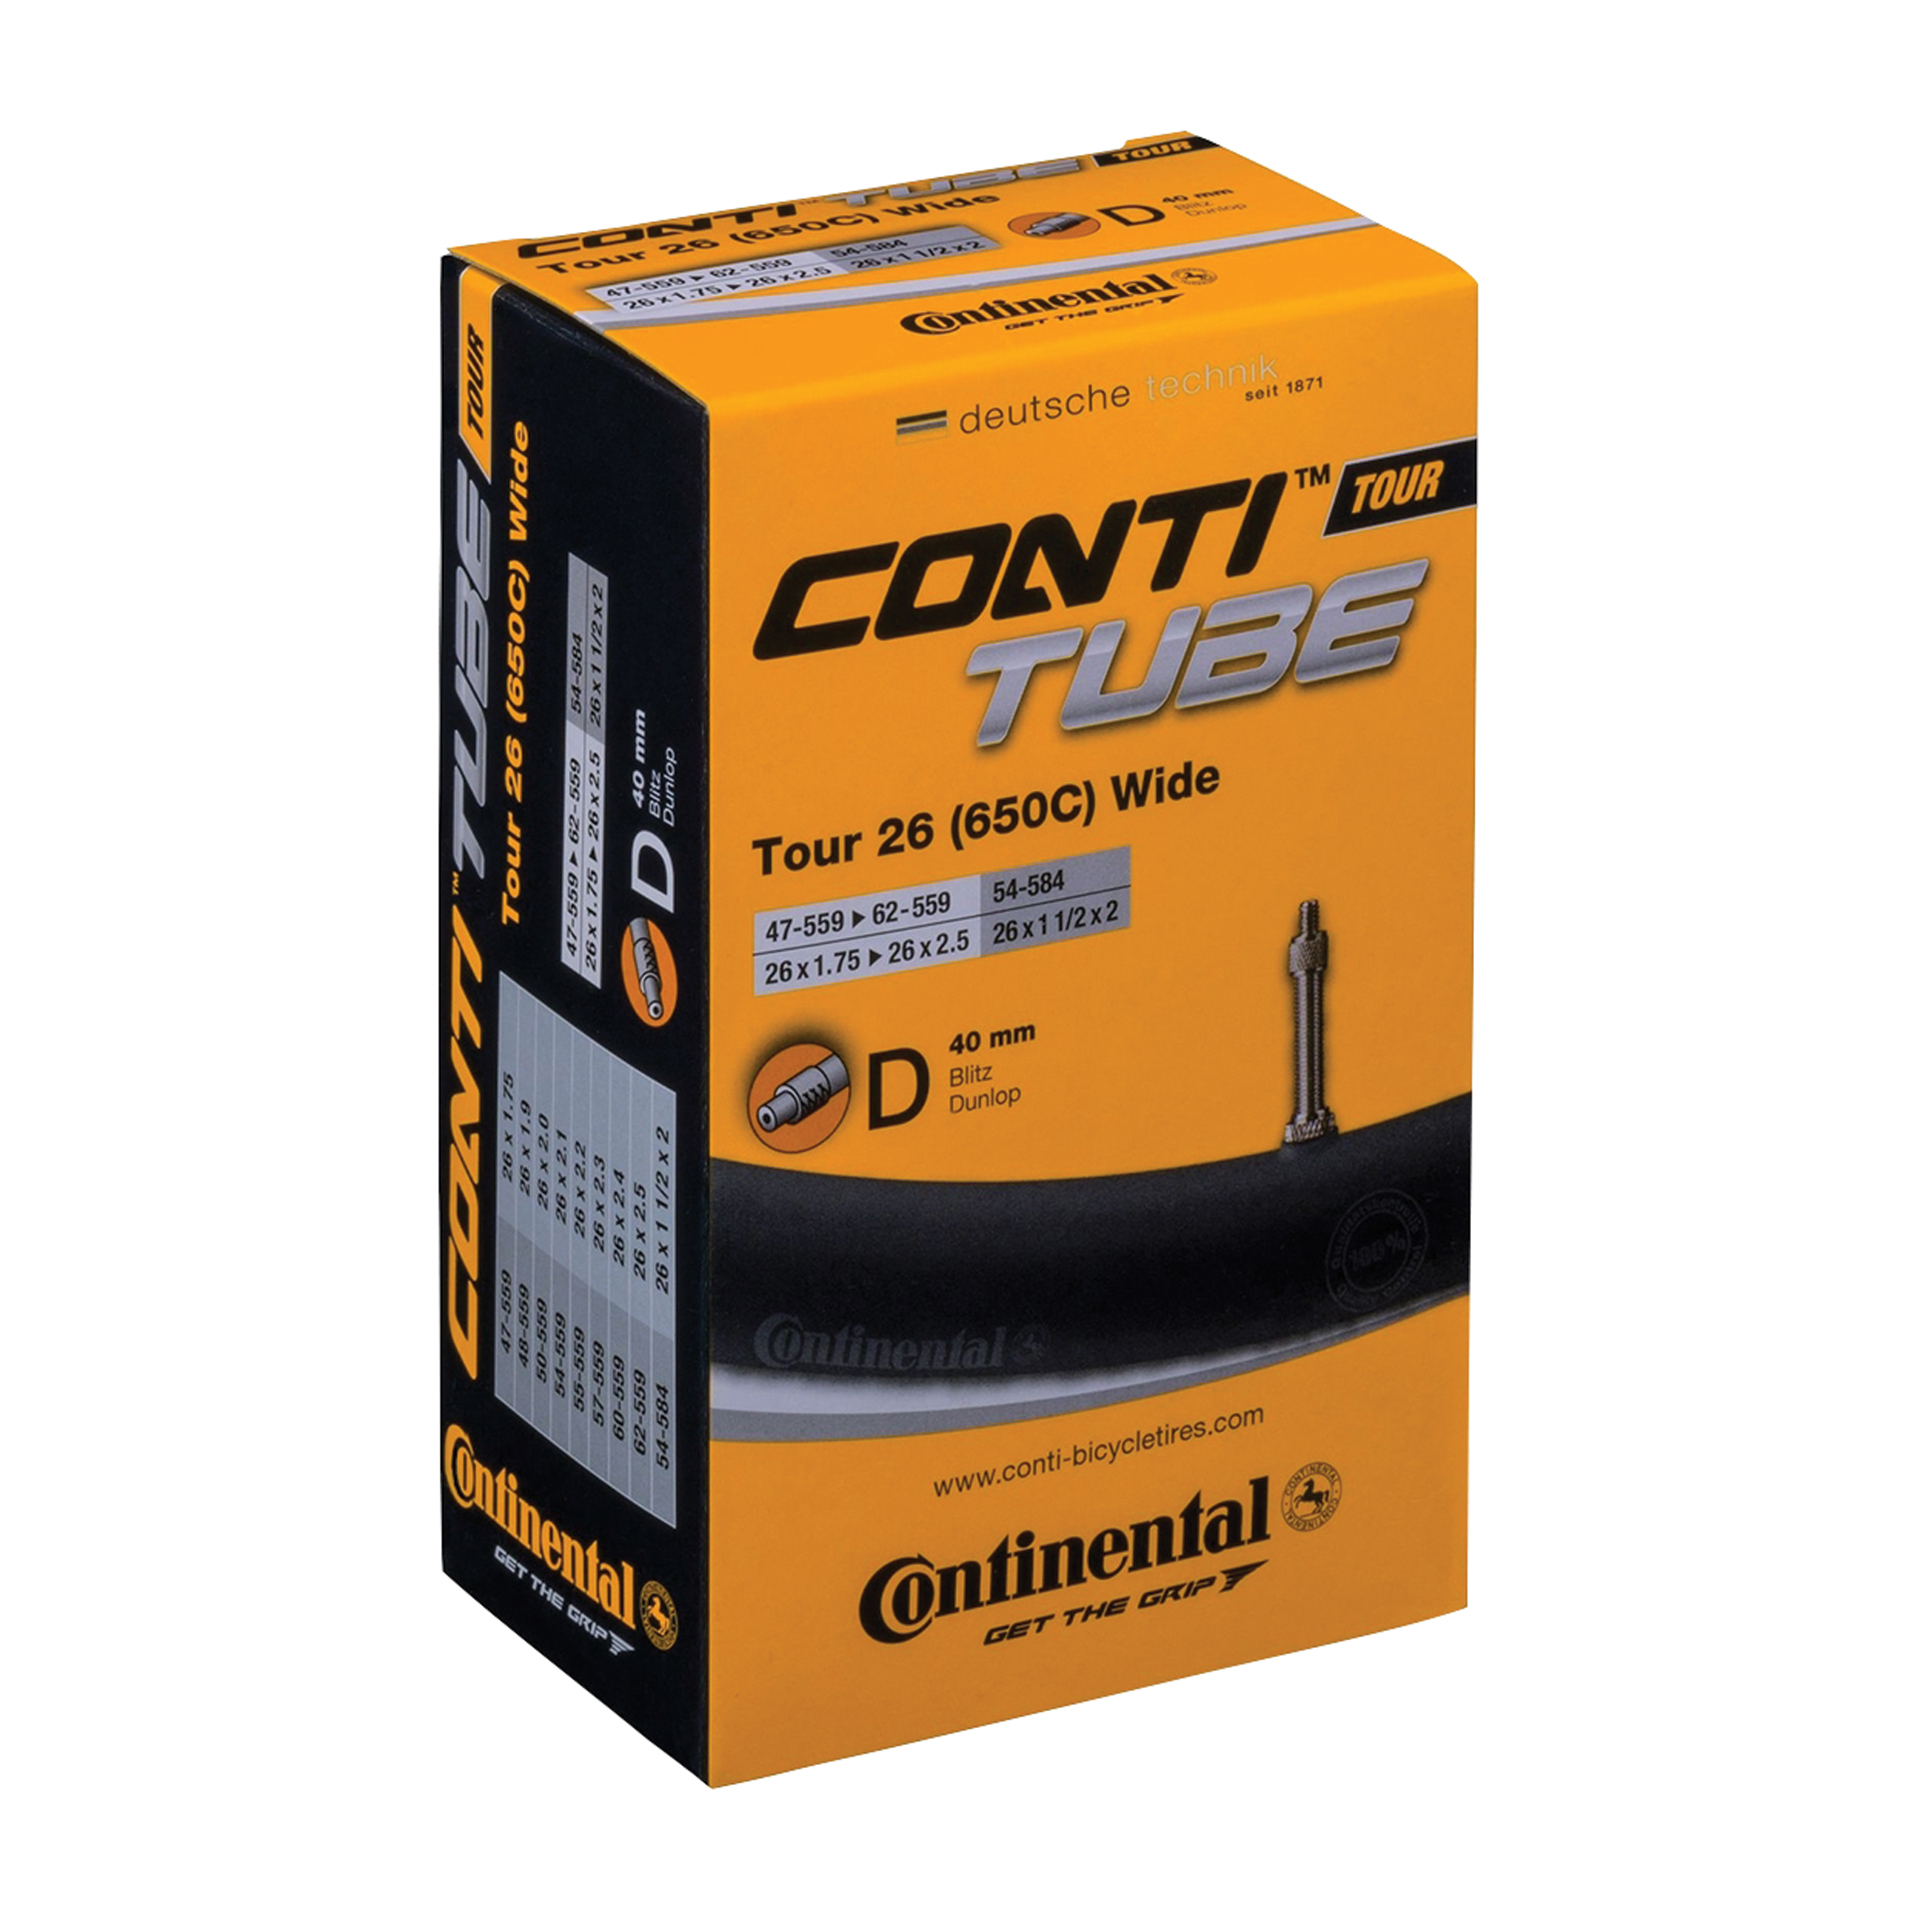 Continental Continental Binnenband Tour 26" Wide 40mm DV 5036707